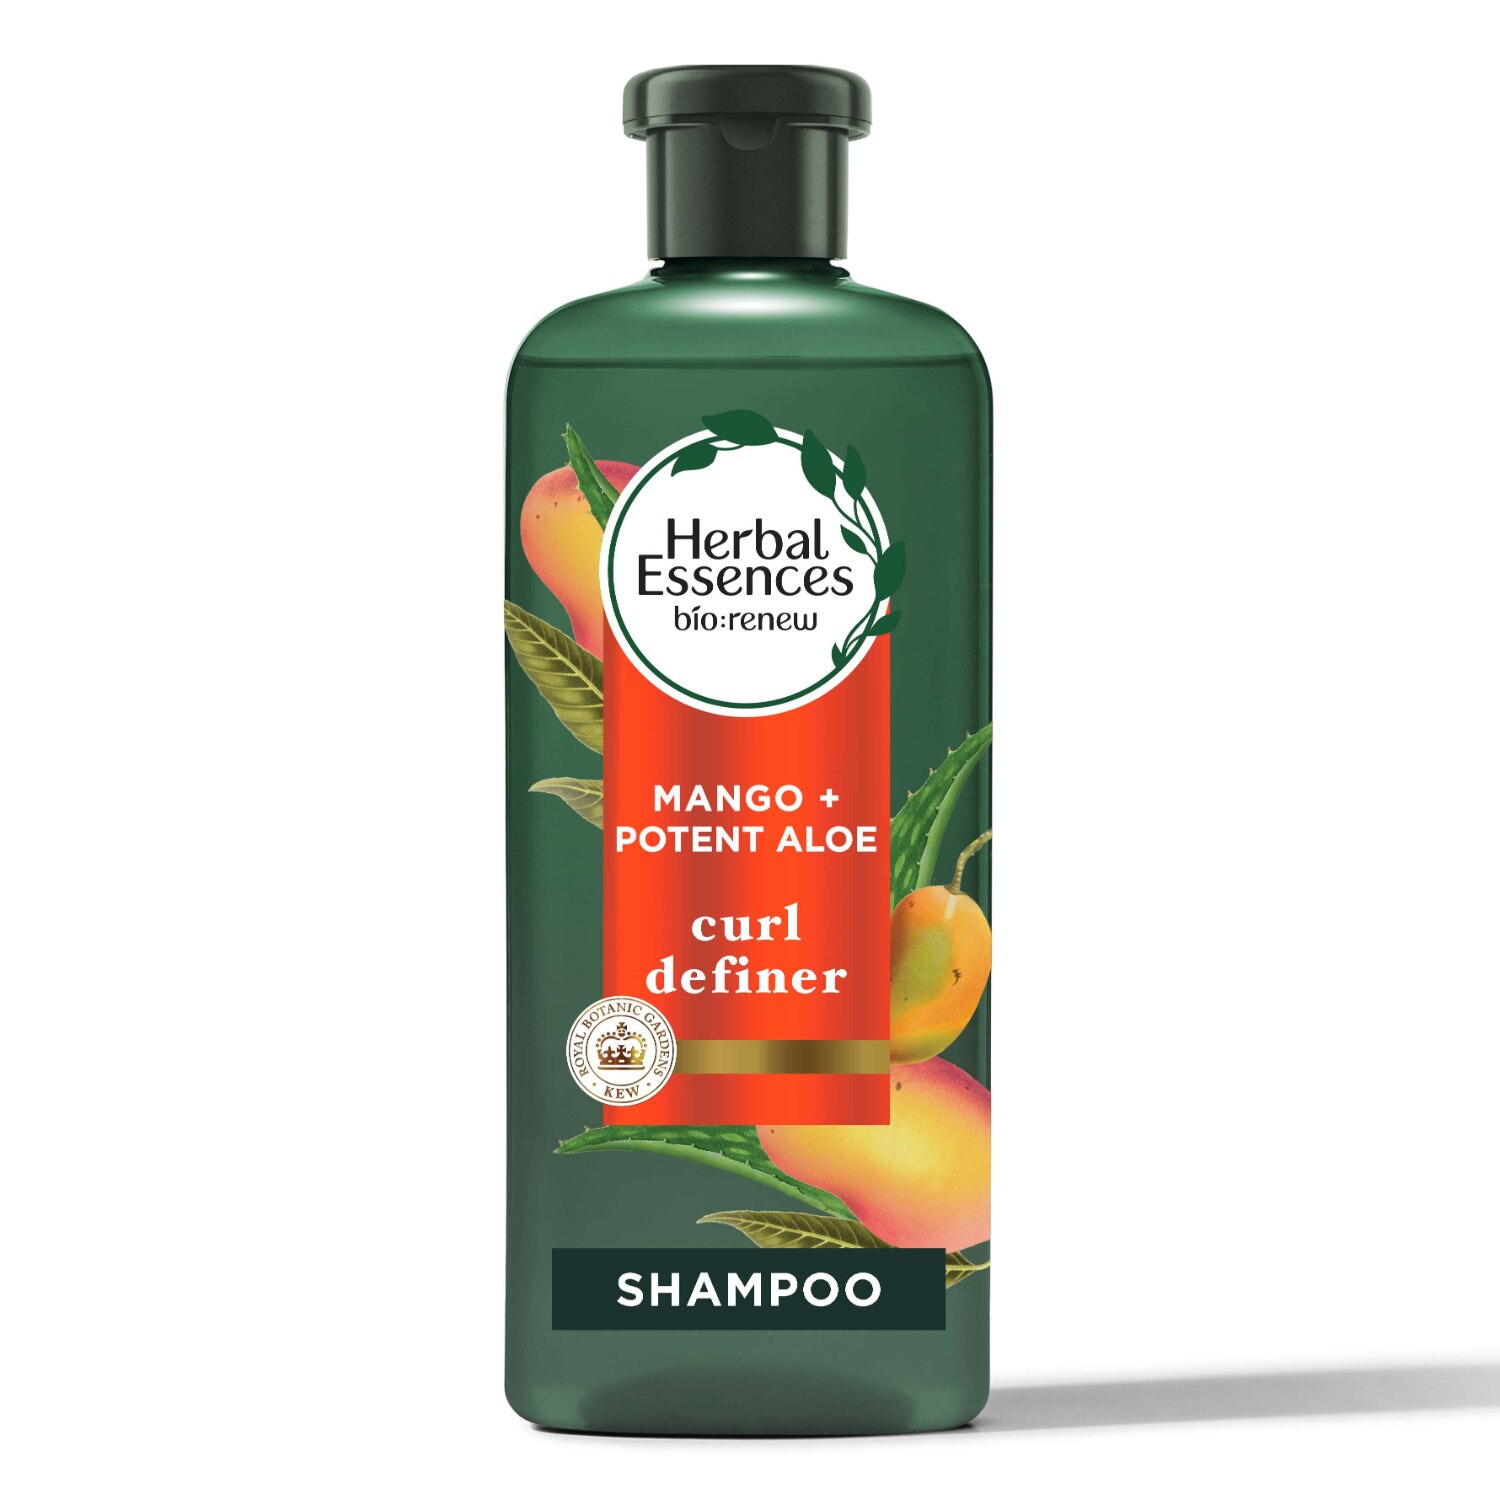 Herbal Essences bio:renew - Champú sin sulfato para cabello rizado, Potent Aloe + Mango, 13.5 oz